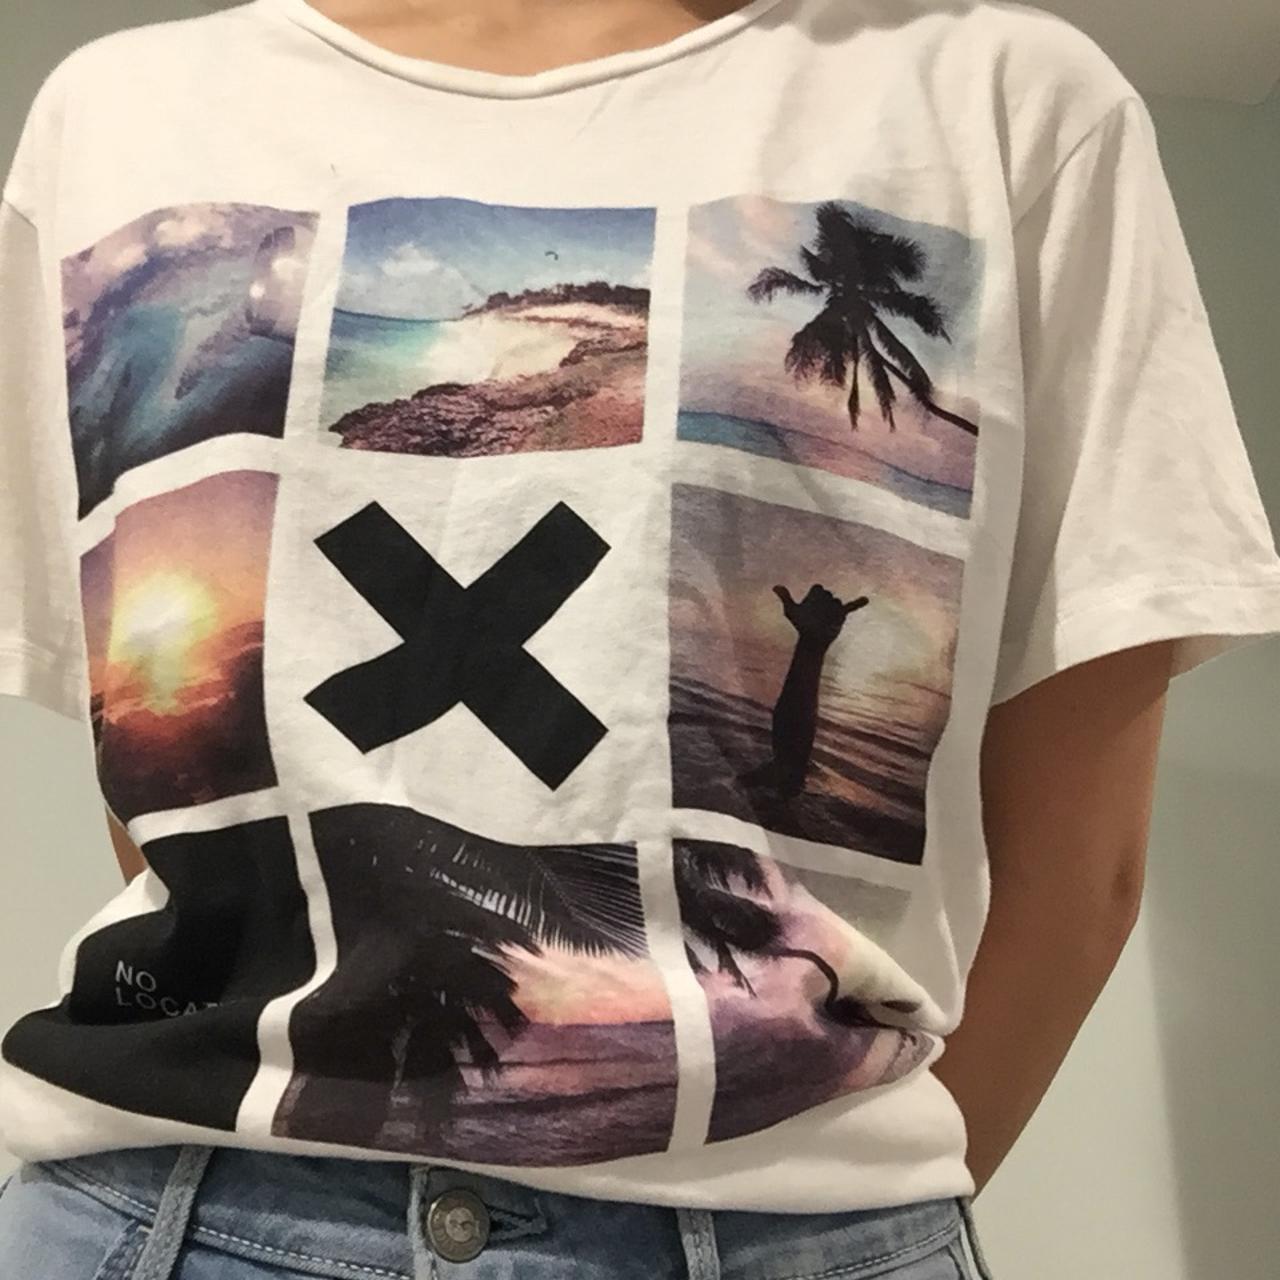 Express Yourself T-Shirt (M)